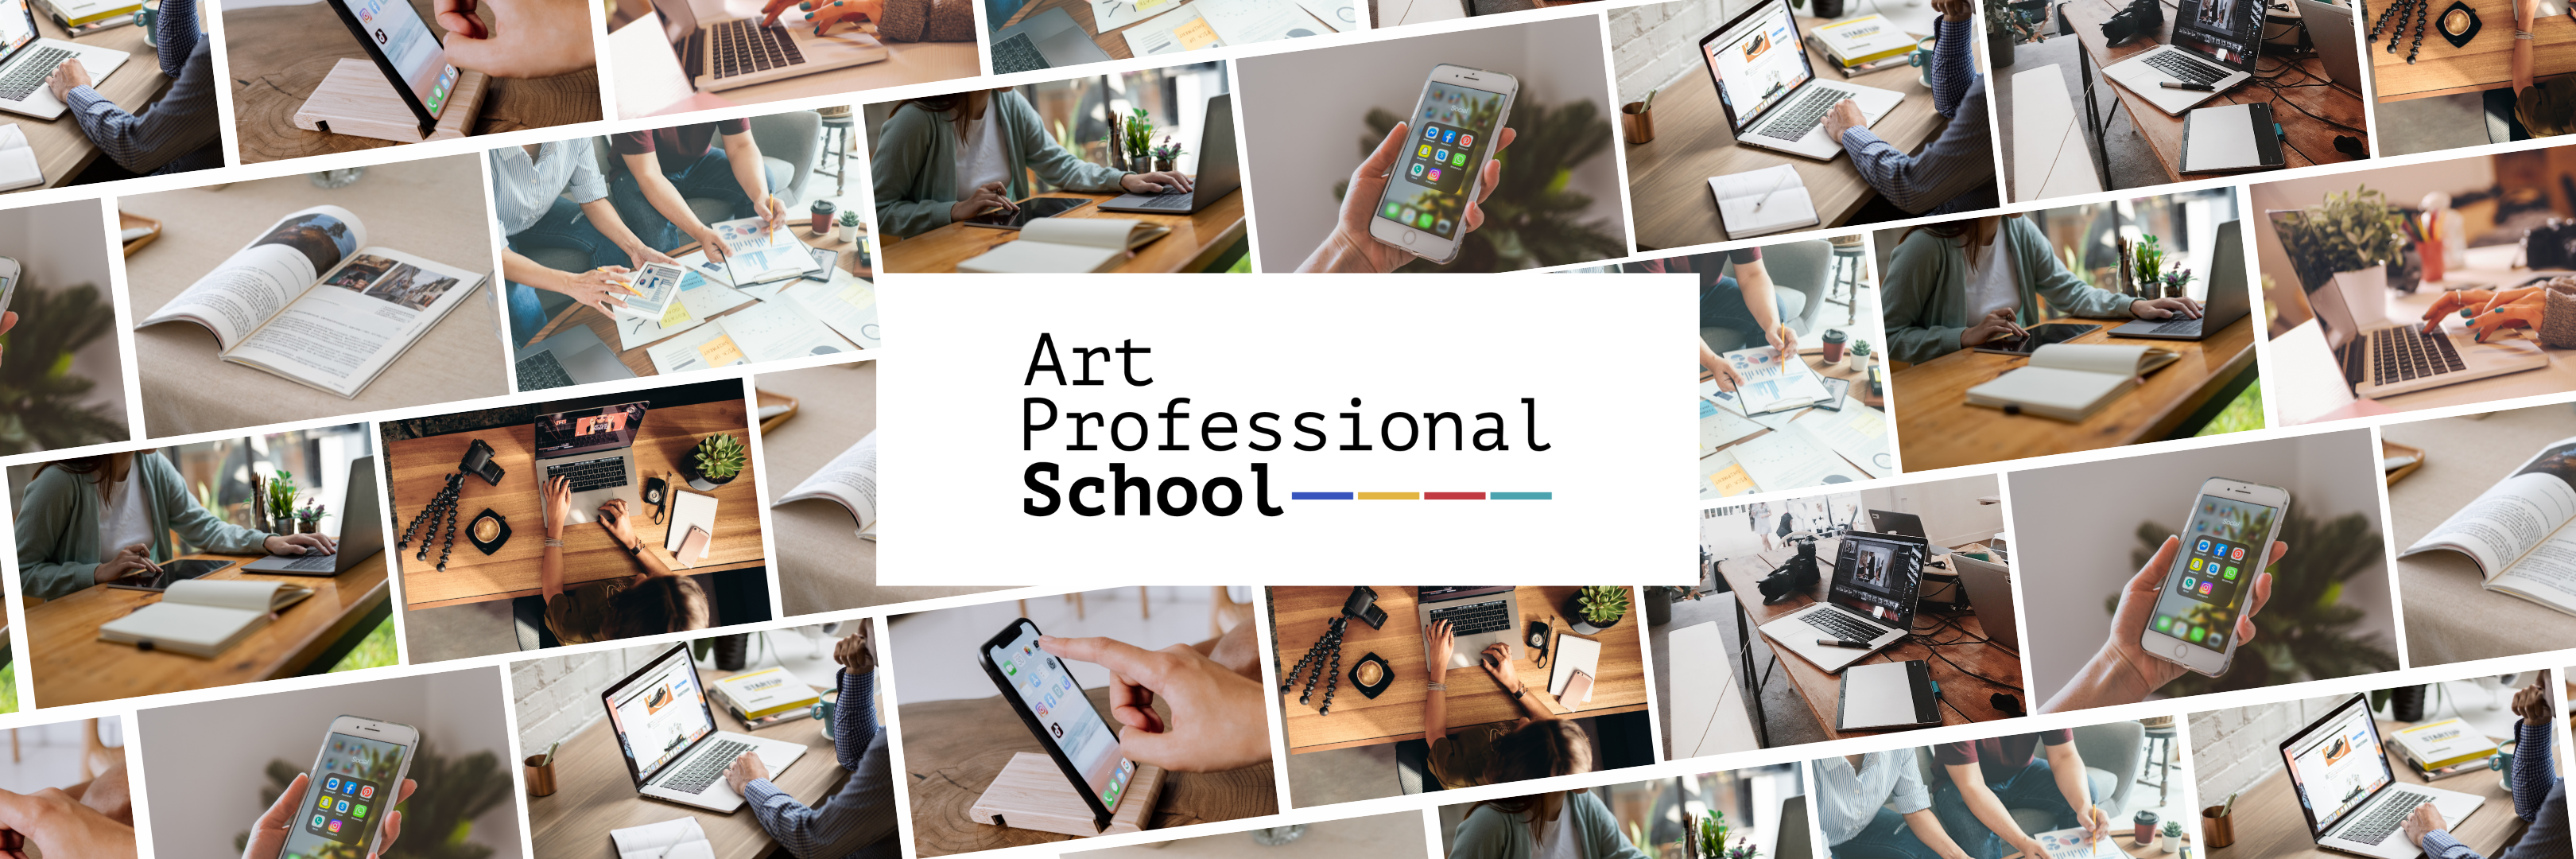 Art Professional School, illustrations supports print et digital, ecrans, smartphones, website, communication